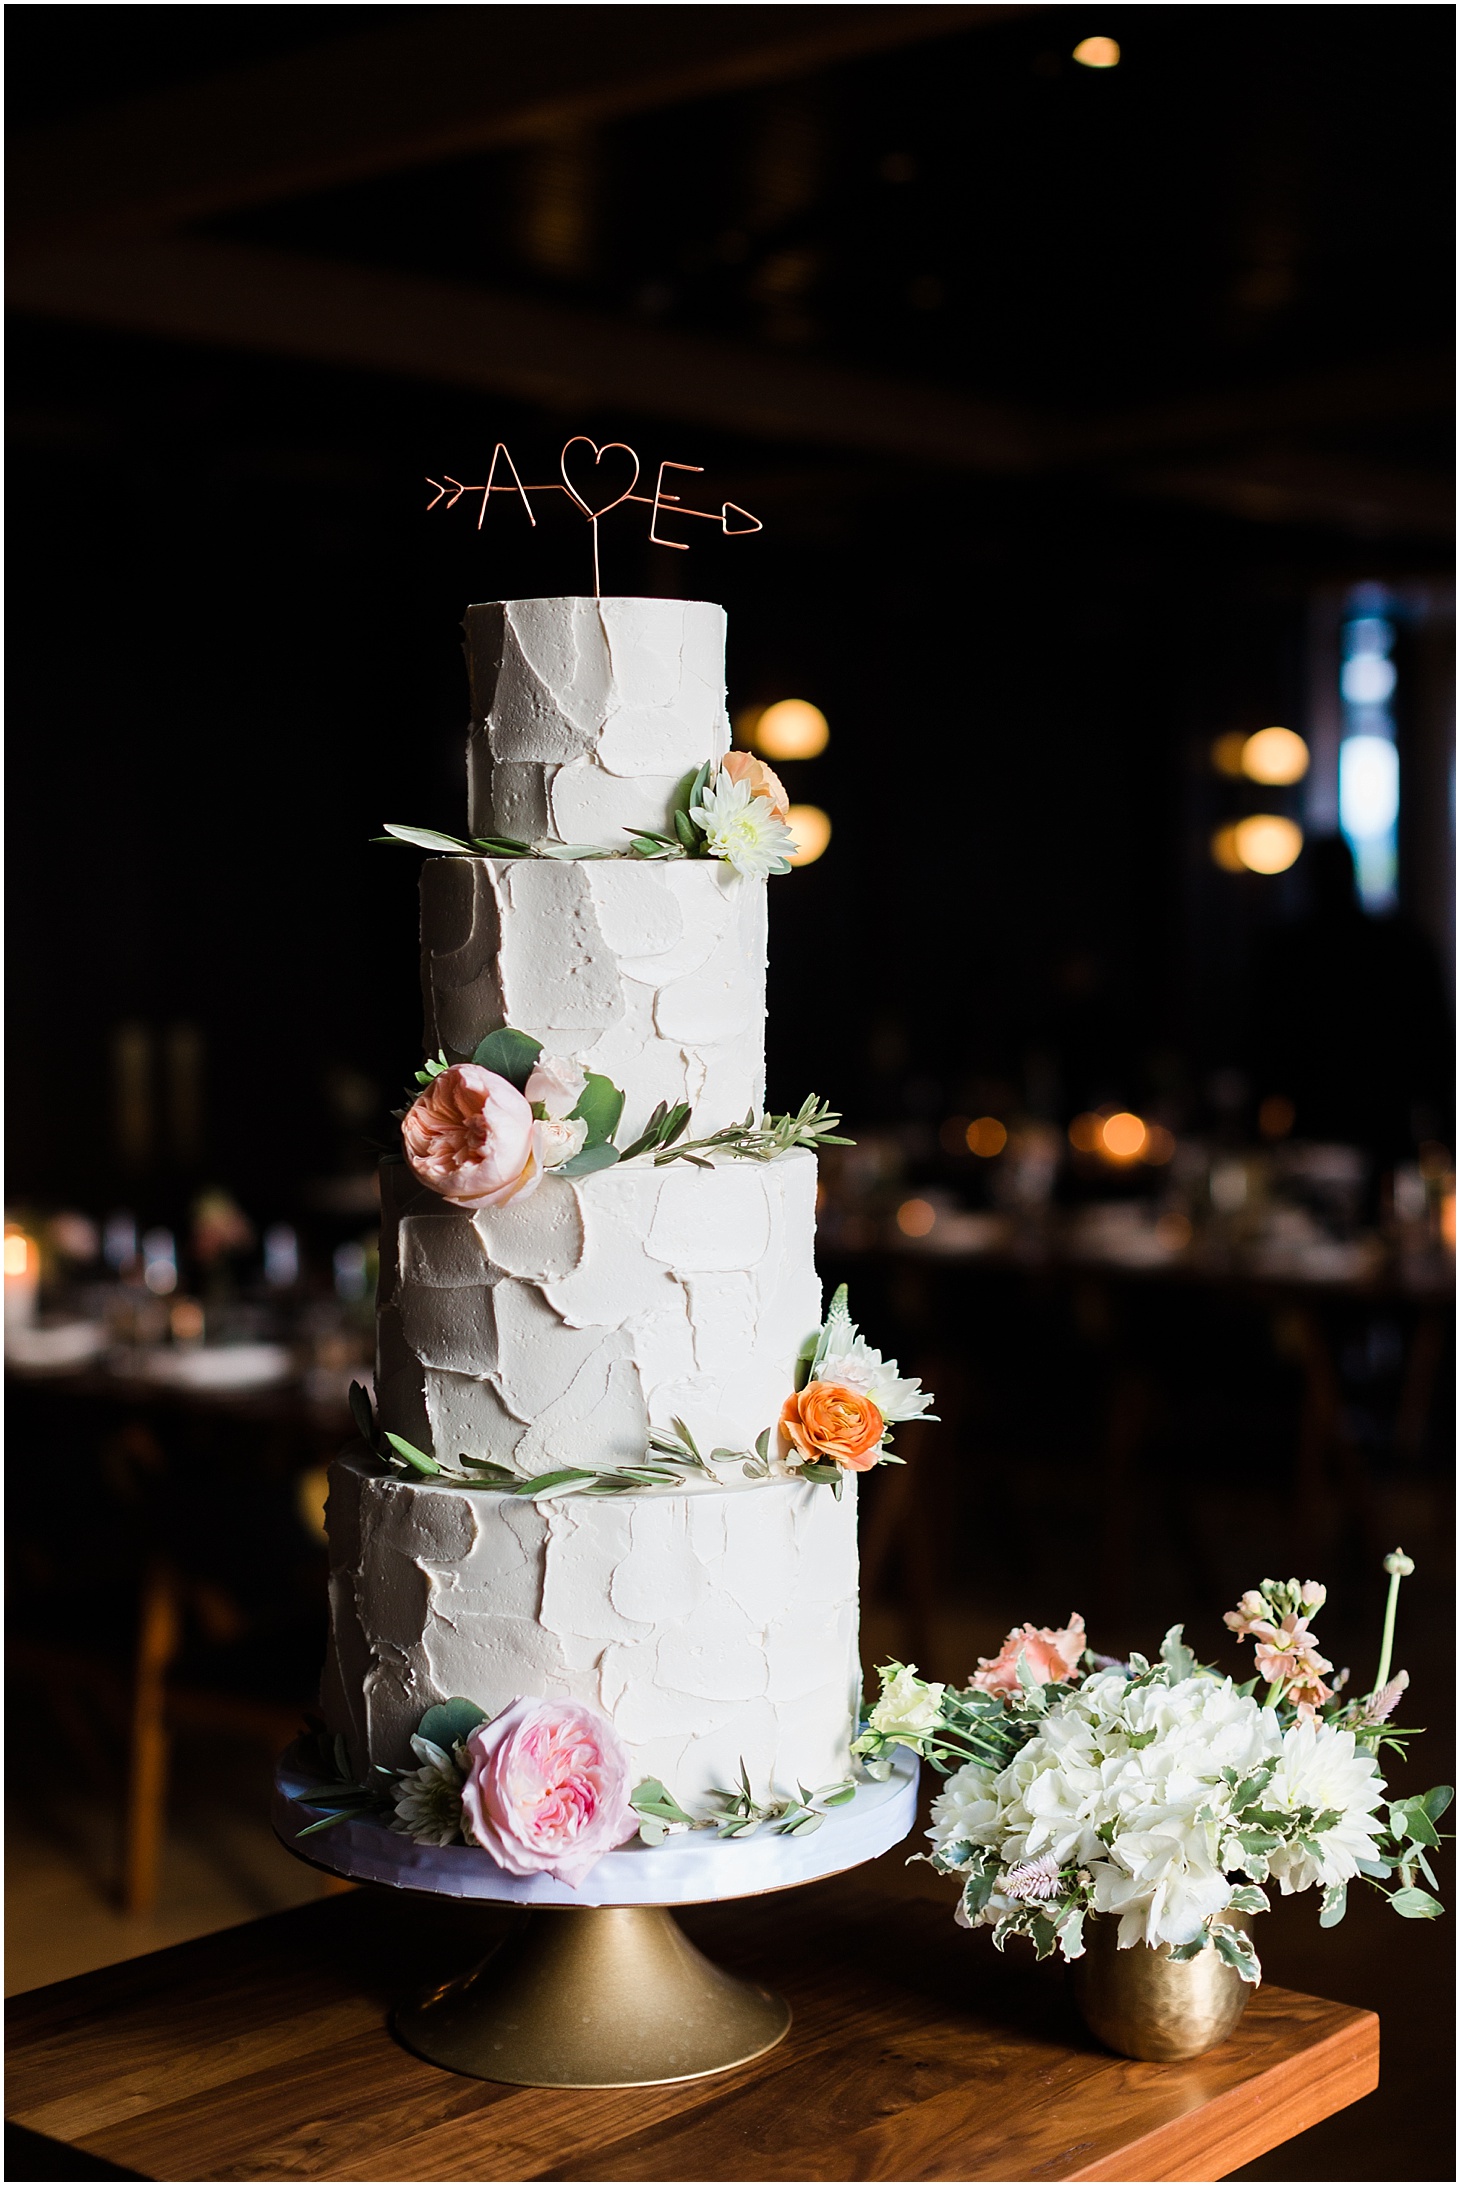 Wedding Reception at District Winery | Buttercream Bakeshop Wedding Cake | Chic and Modern Interfaith Wedding in Washington, DC | Sarah Bradshaw Photography